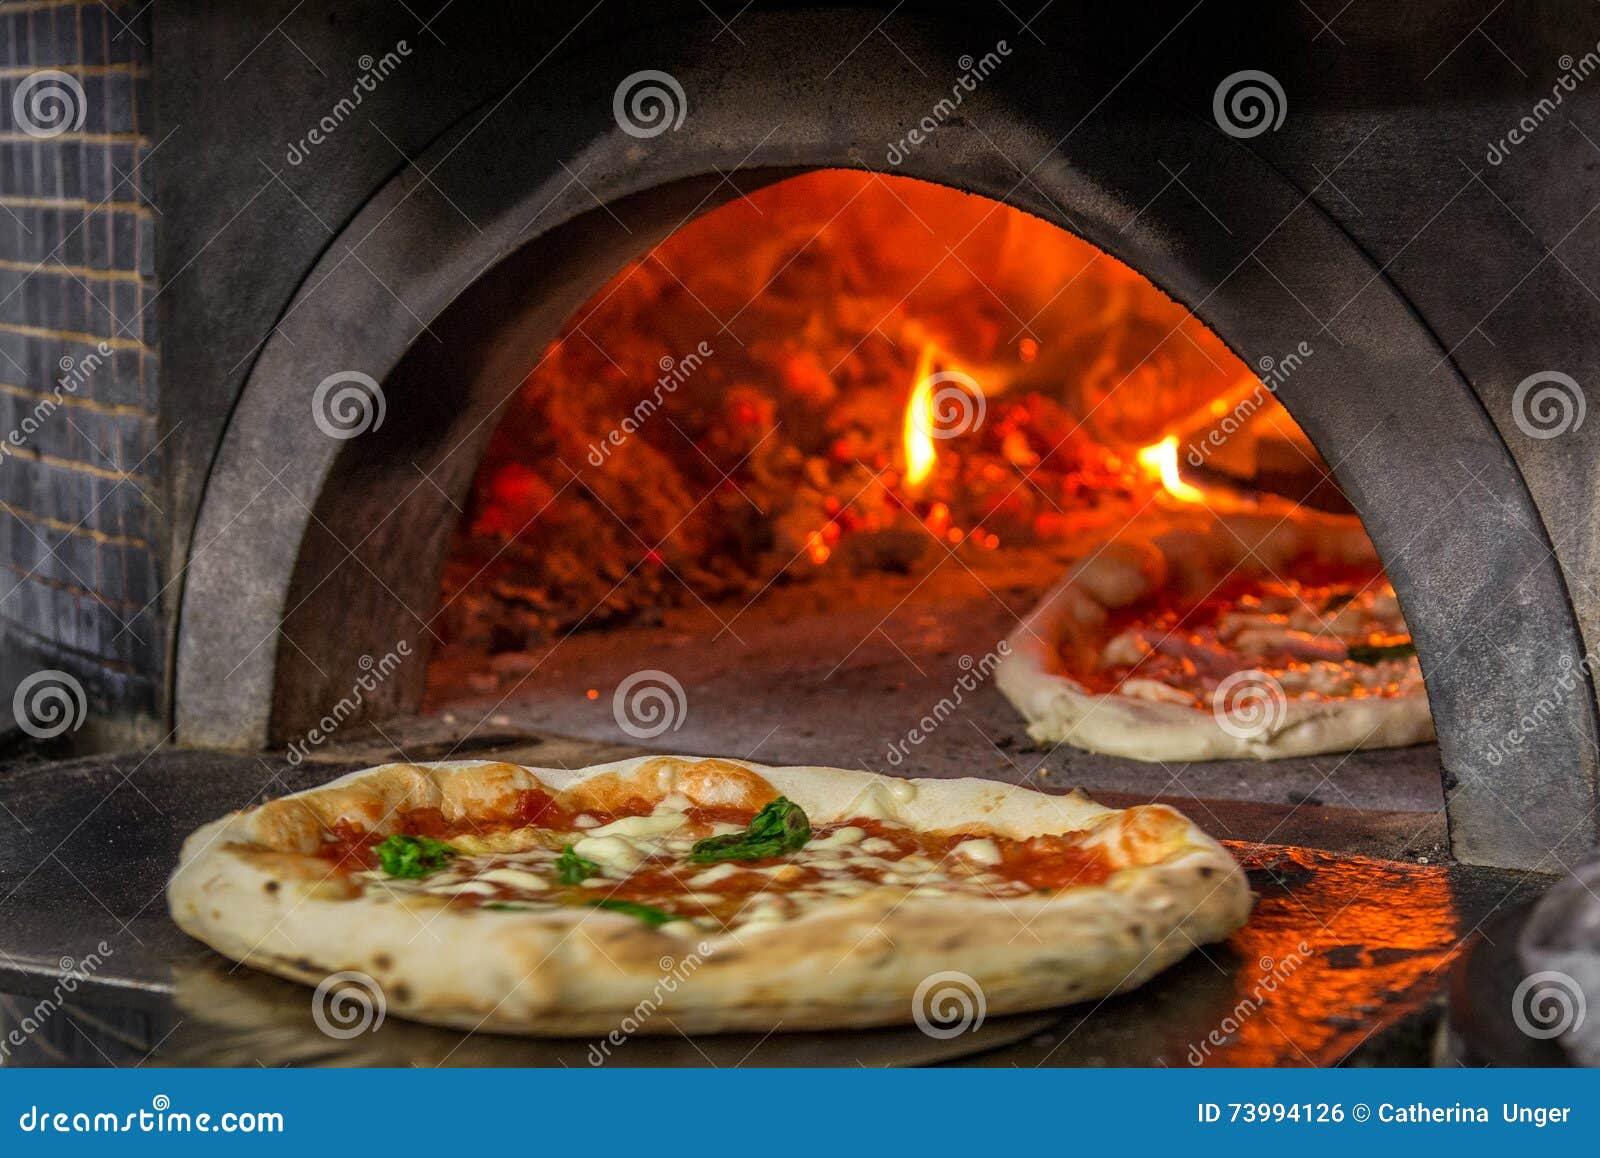 pizza oven in naples